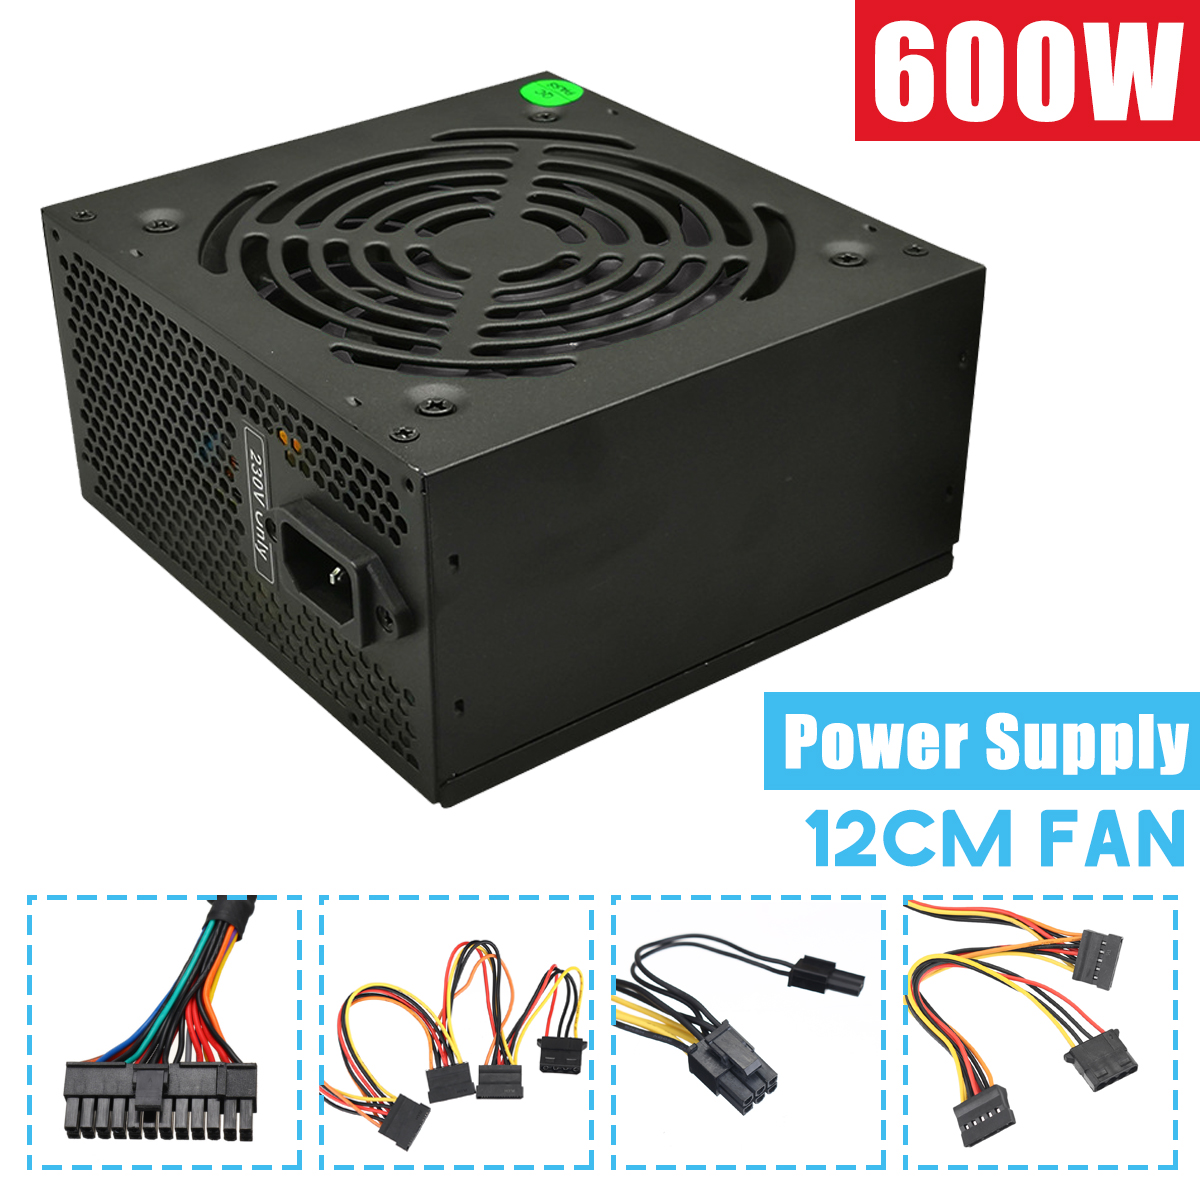 600W-Power-Supply-12cm-Fan-8-Pin-PCI-SATA-12V-Computer-Power-Supply-1656481-2